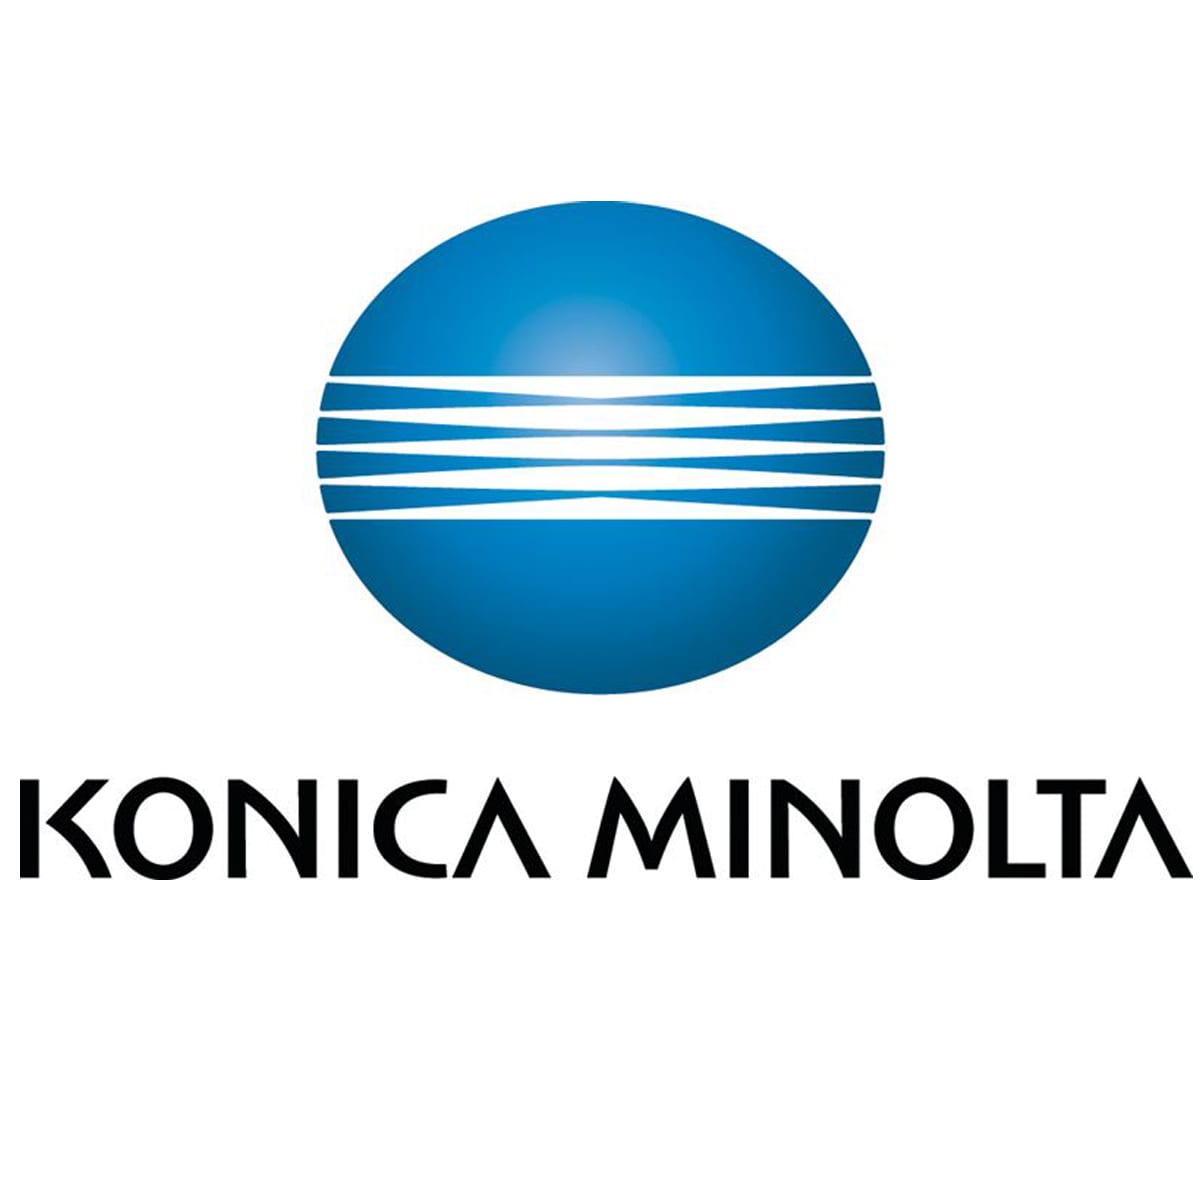 konica logo - Konica Minolta — Print Ad Copywriting